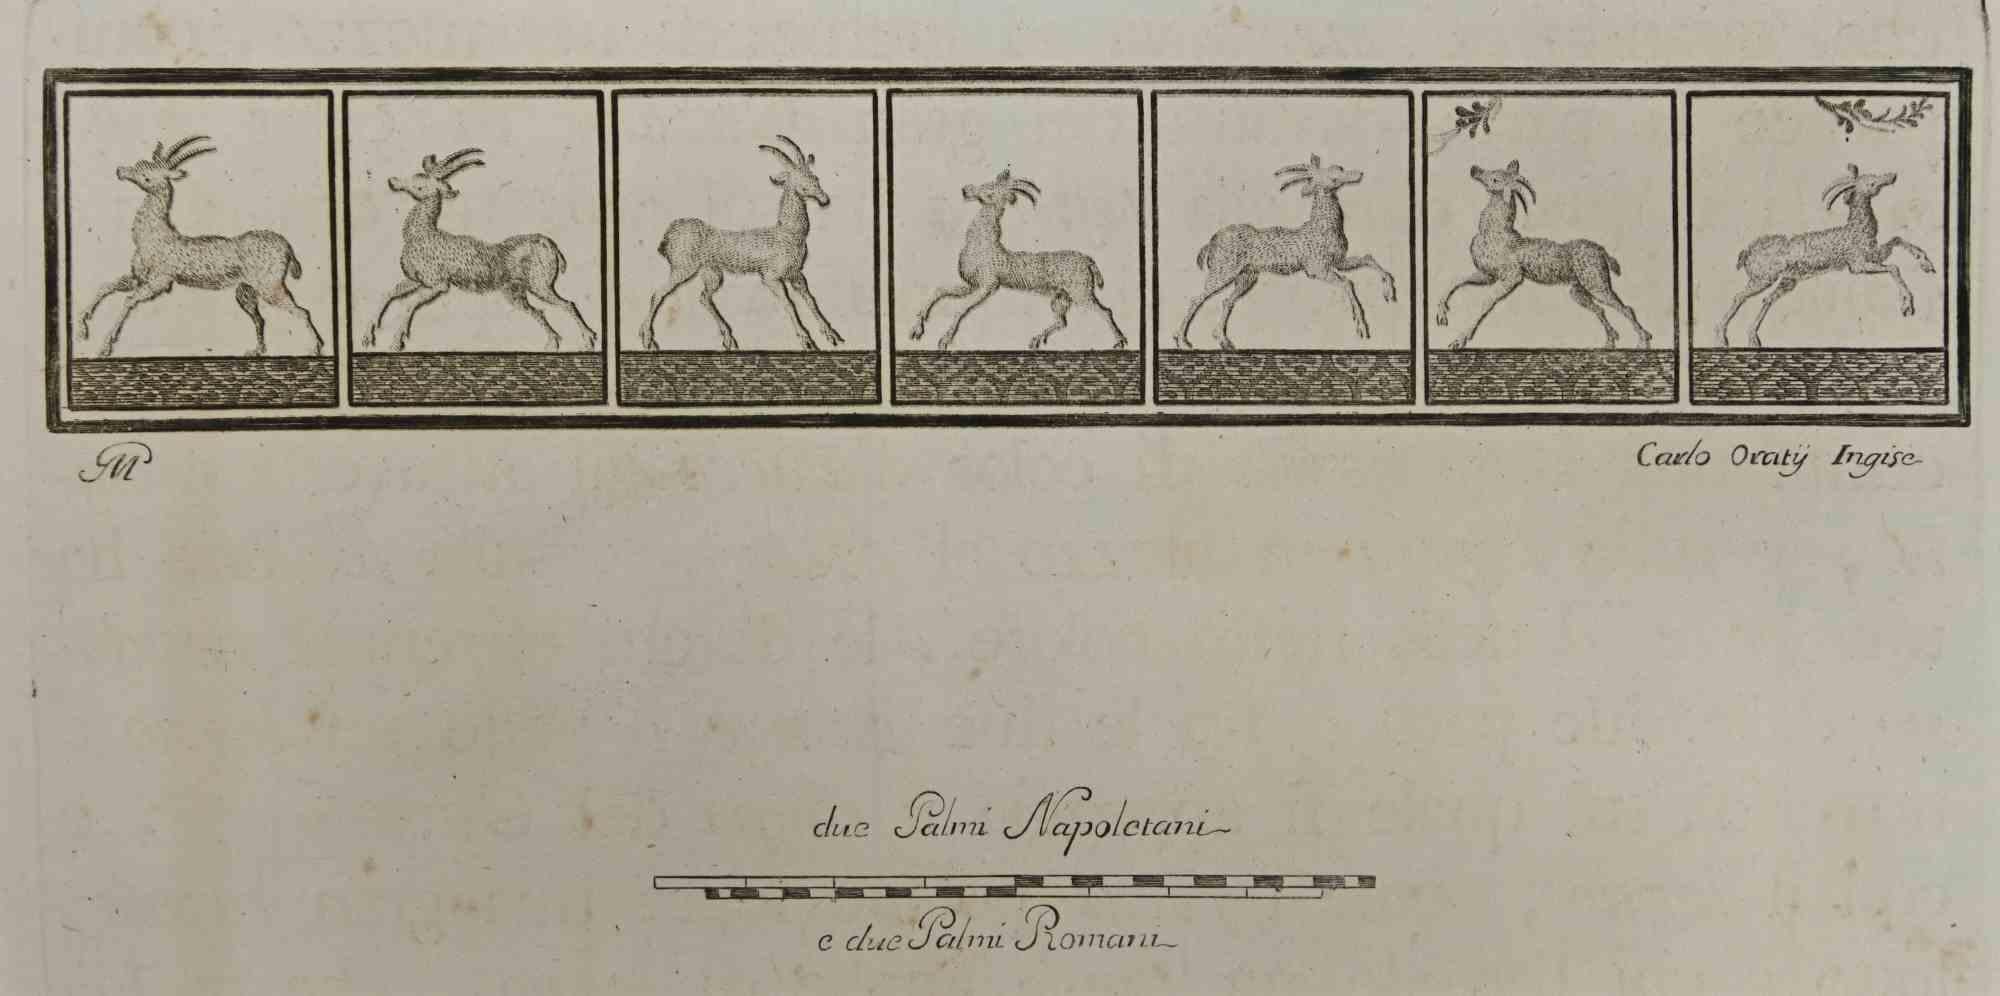 Carlo Oratij Figurative Print - Ancient Deers Hercolaneum - Etching - 18th Century